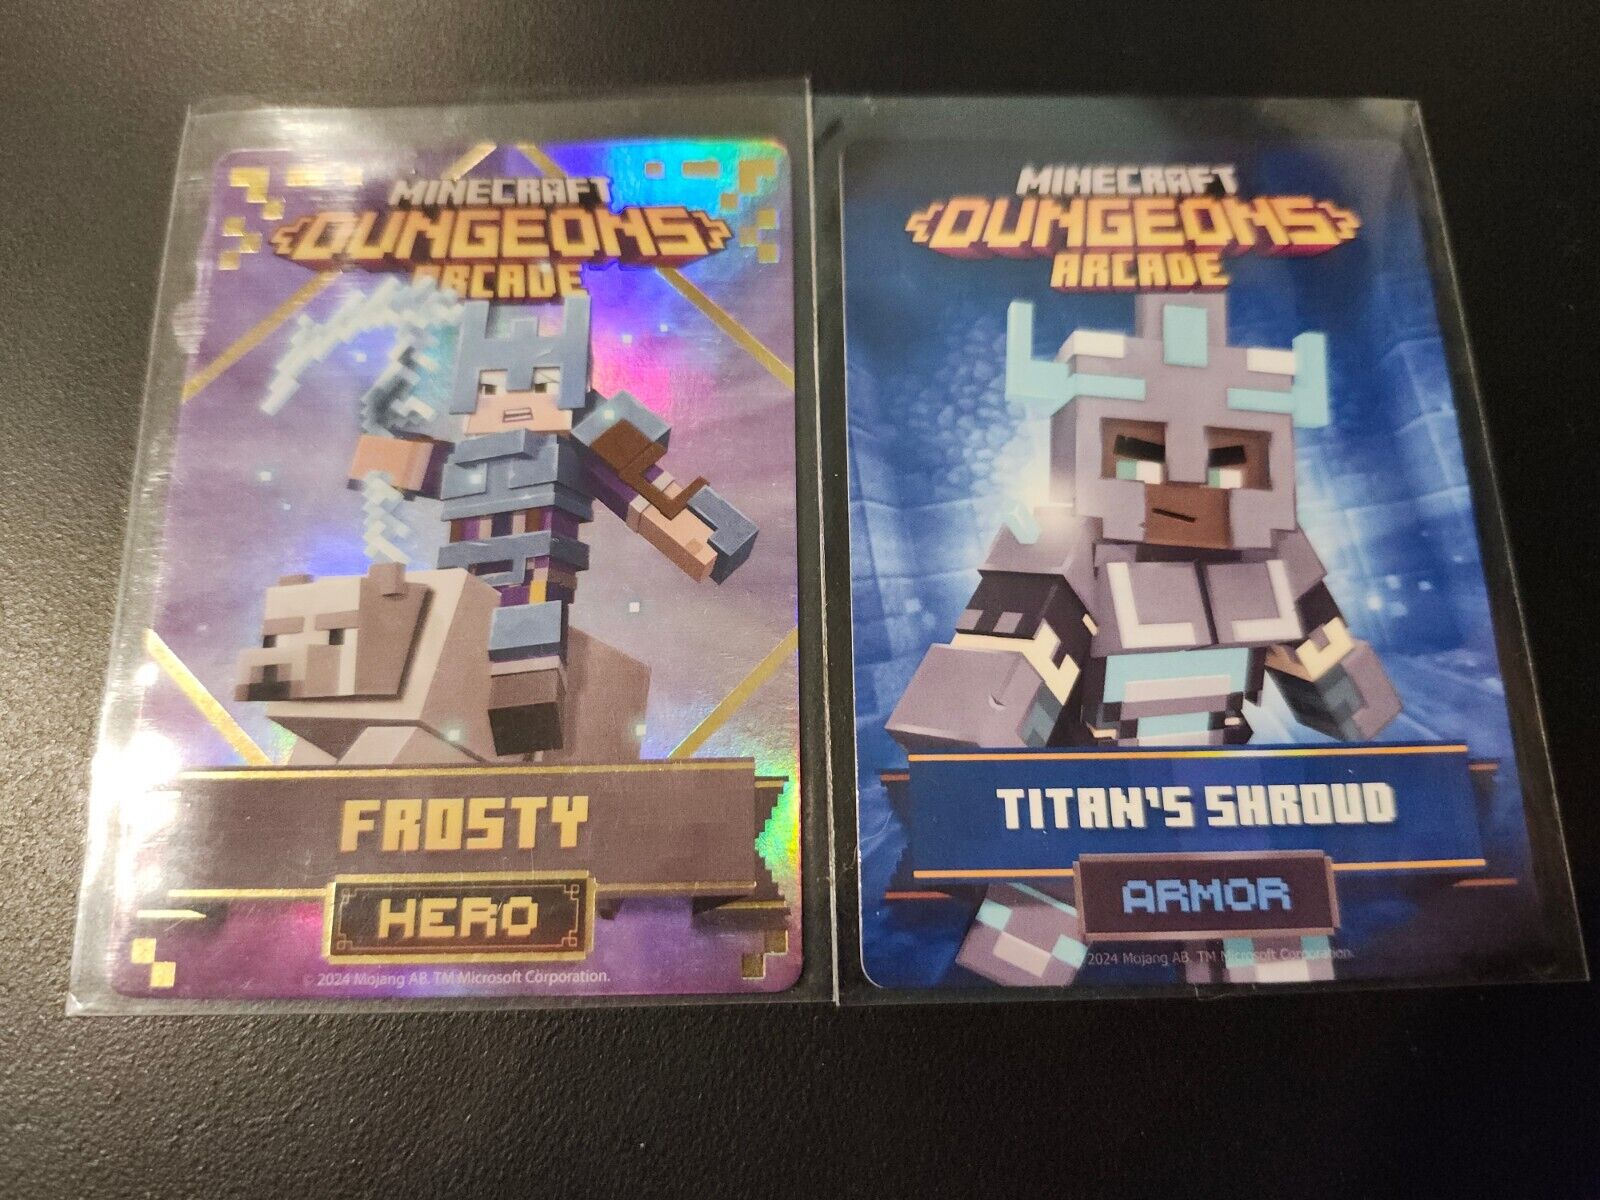 Minecraft Dungeons Arcade Series 3 109 Hero Frosty Holofoil Card + Titan Shroud